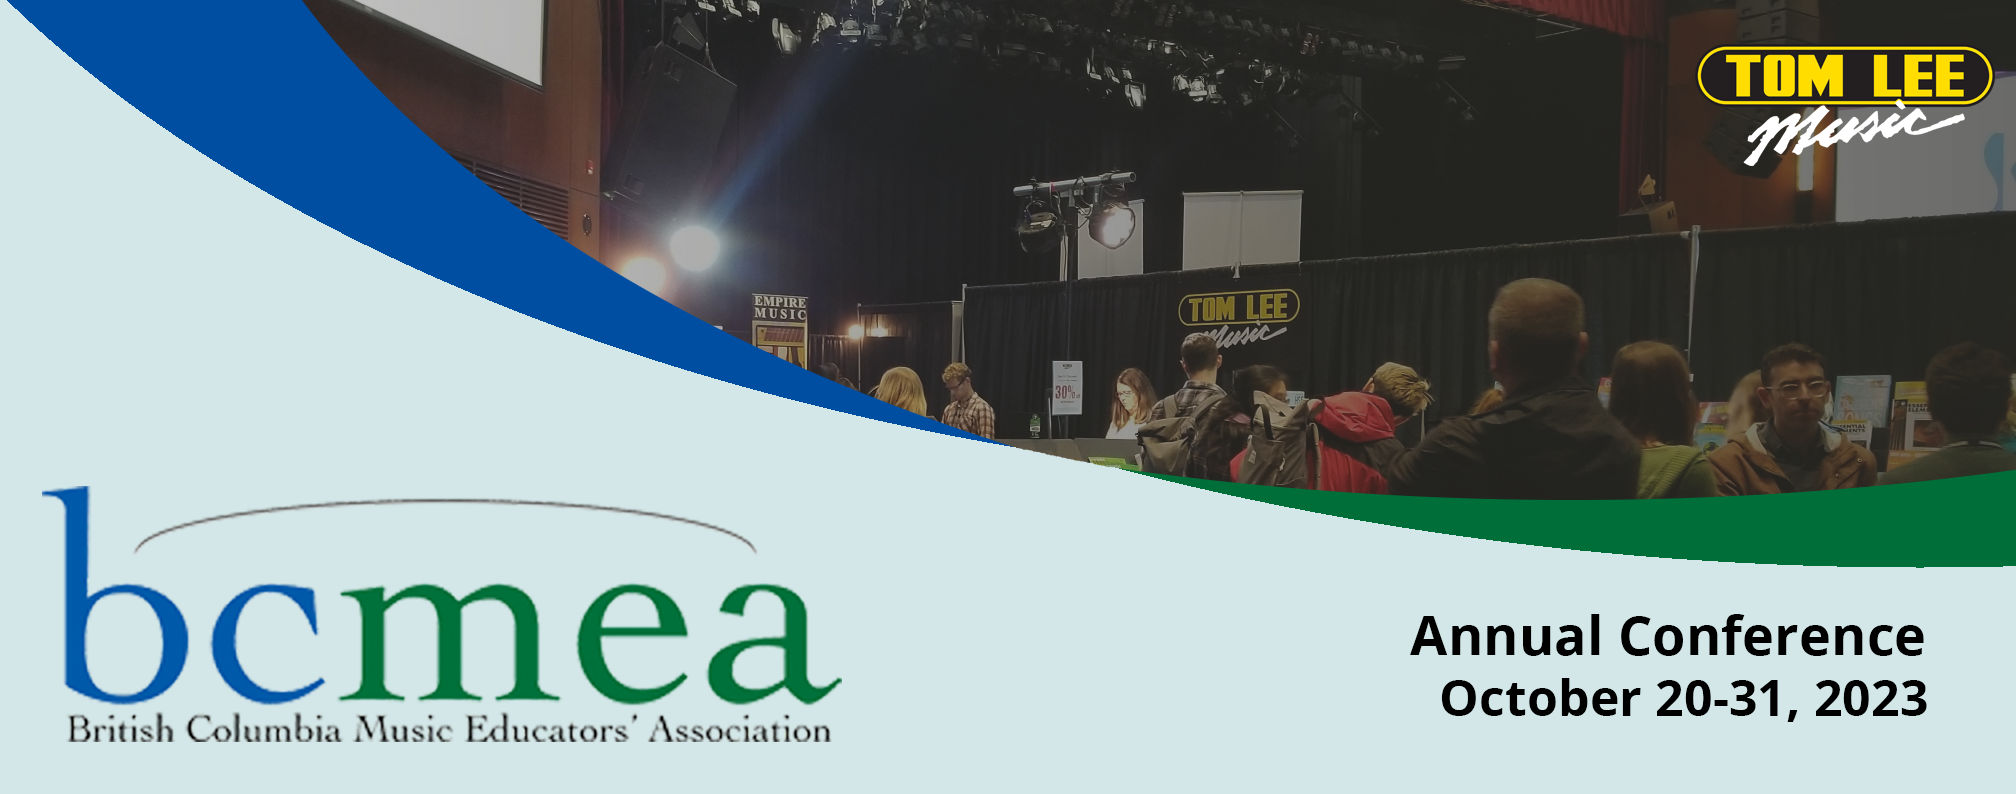 BCMEA British Columbia Music Educators Association - Annual Conference